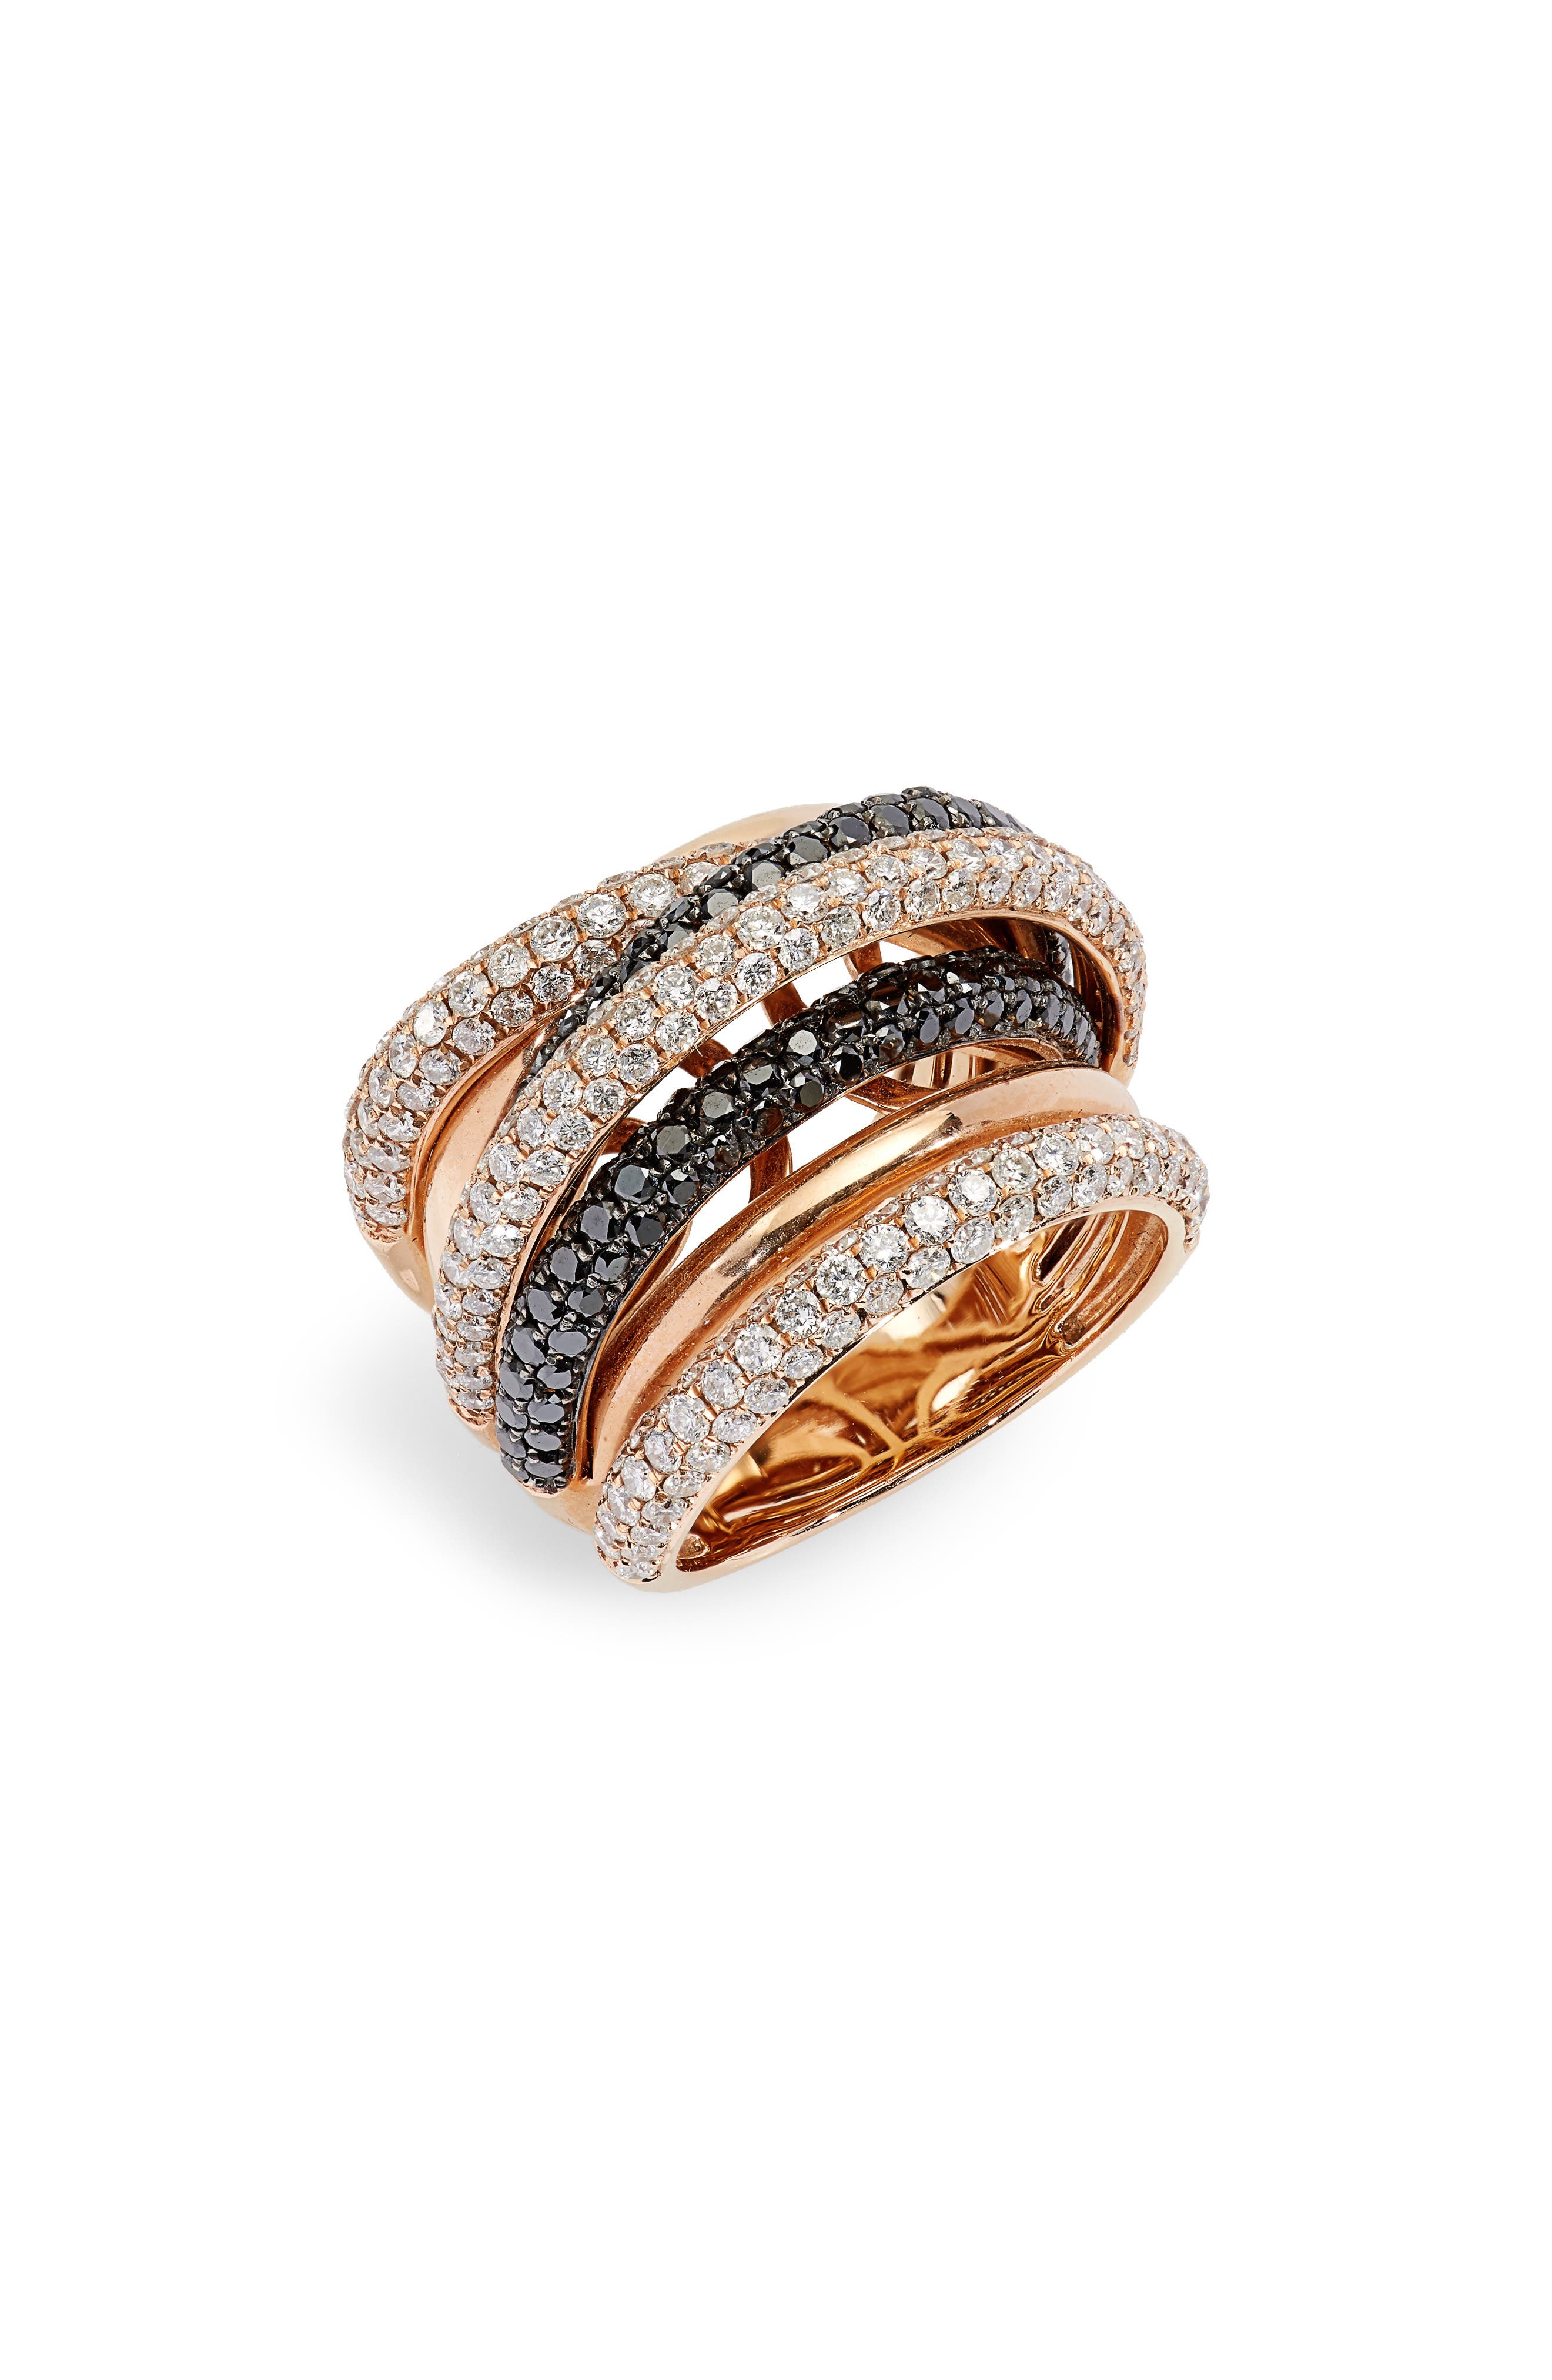 SHAY Jumbo Black & White Diamond Orbit Ring in Rose Gold at Nordstrom, Size 7 Us